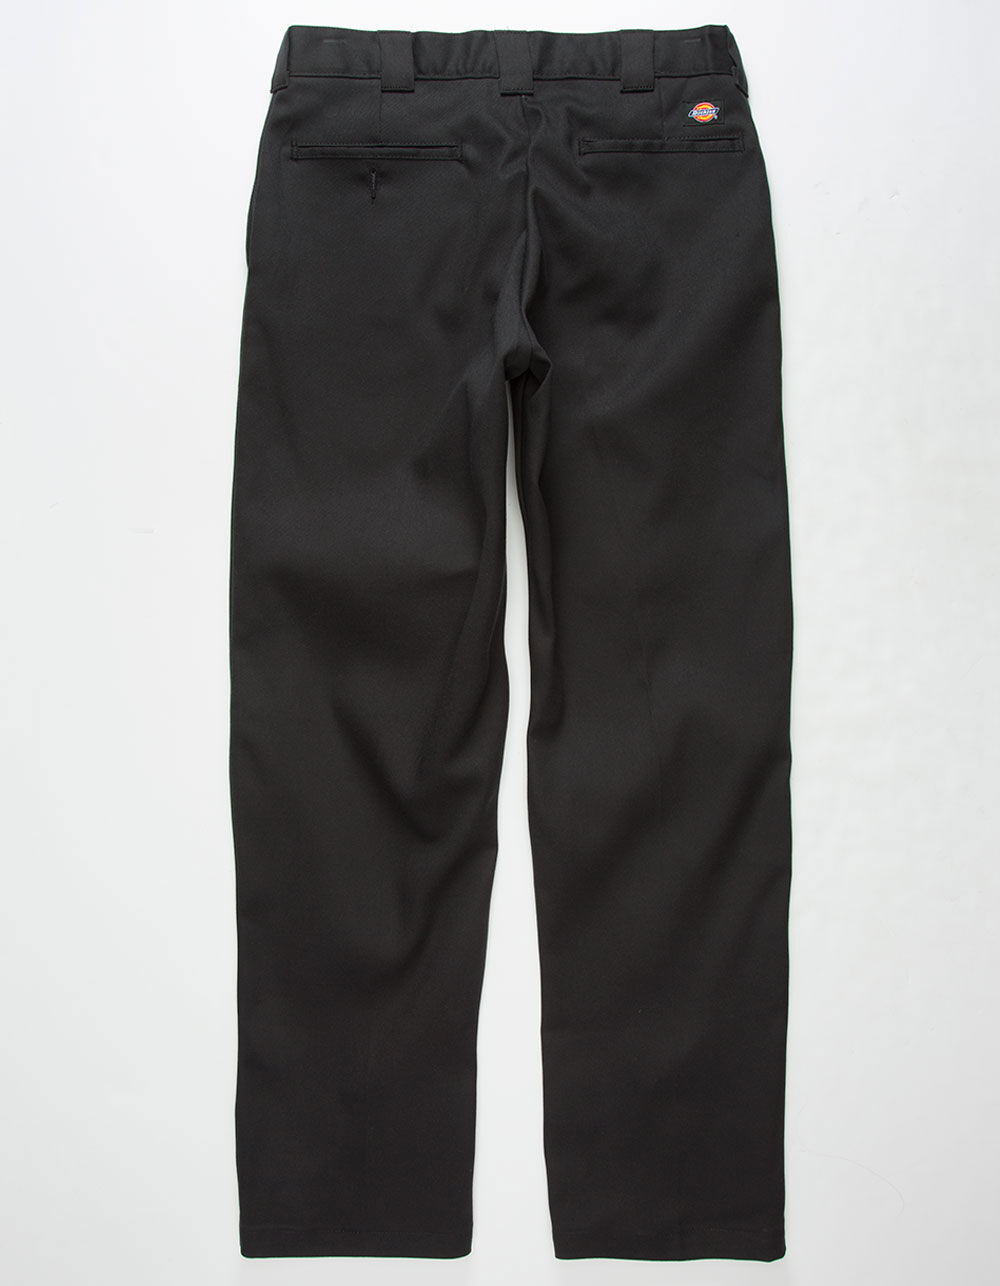 Dickies Men's Original 874 Work Pants in Black